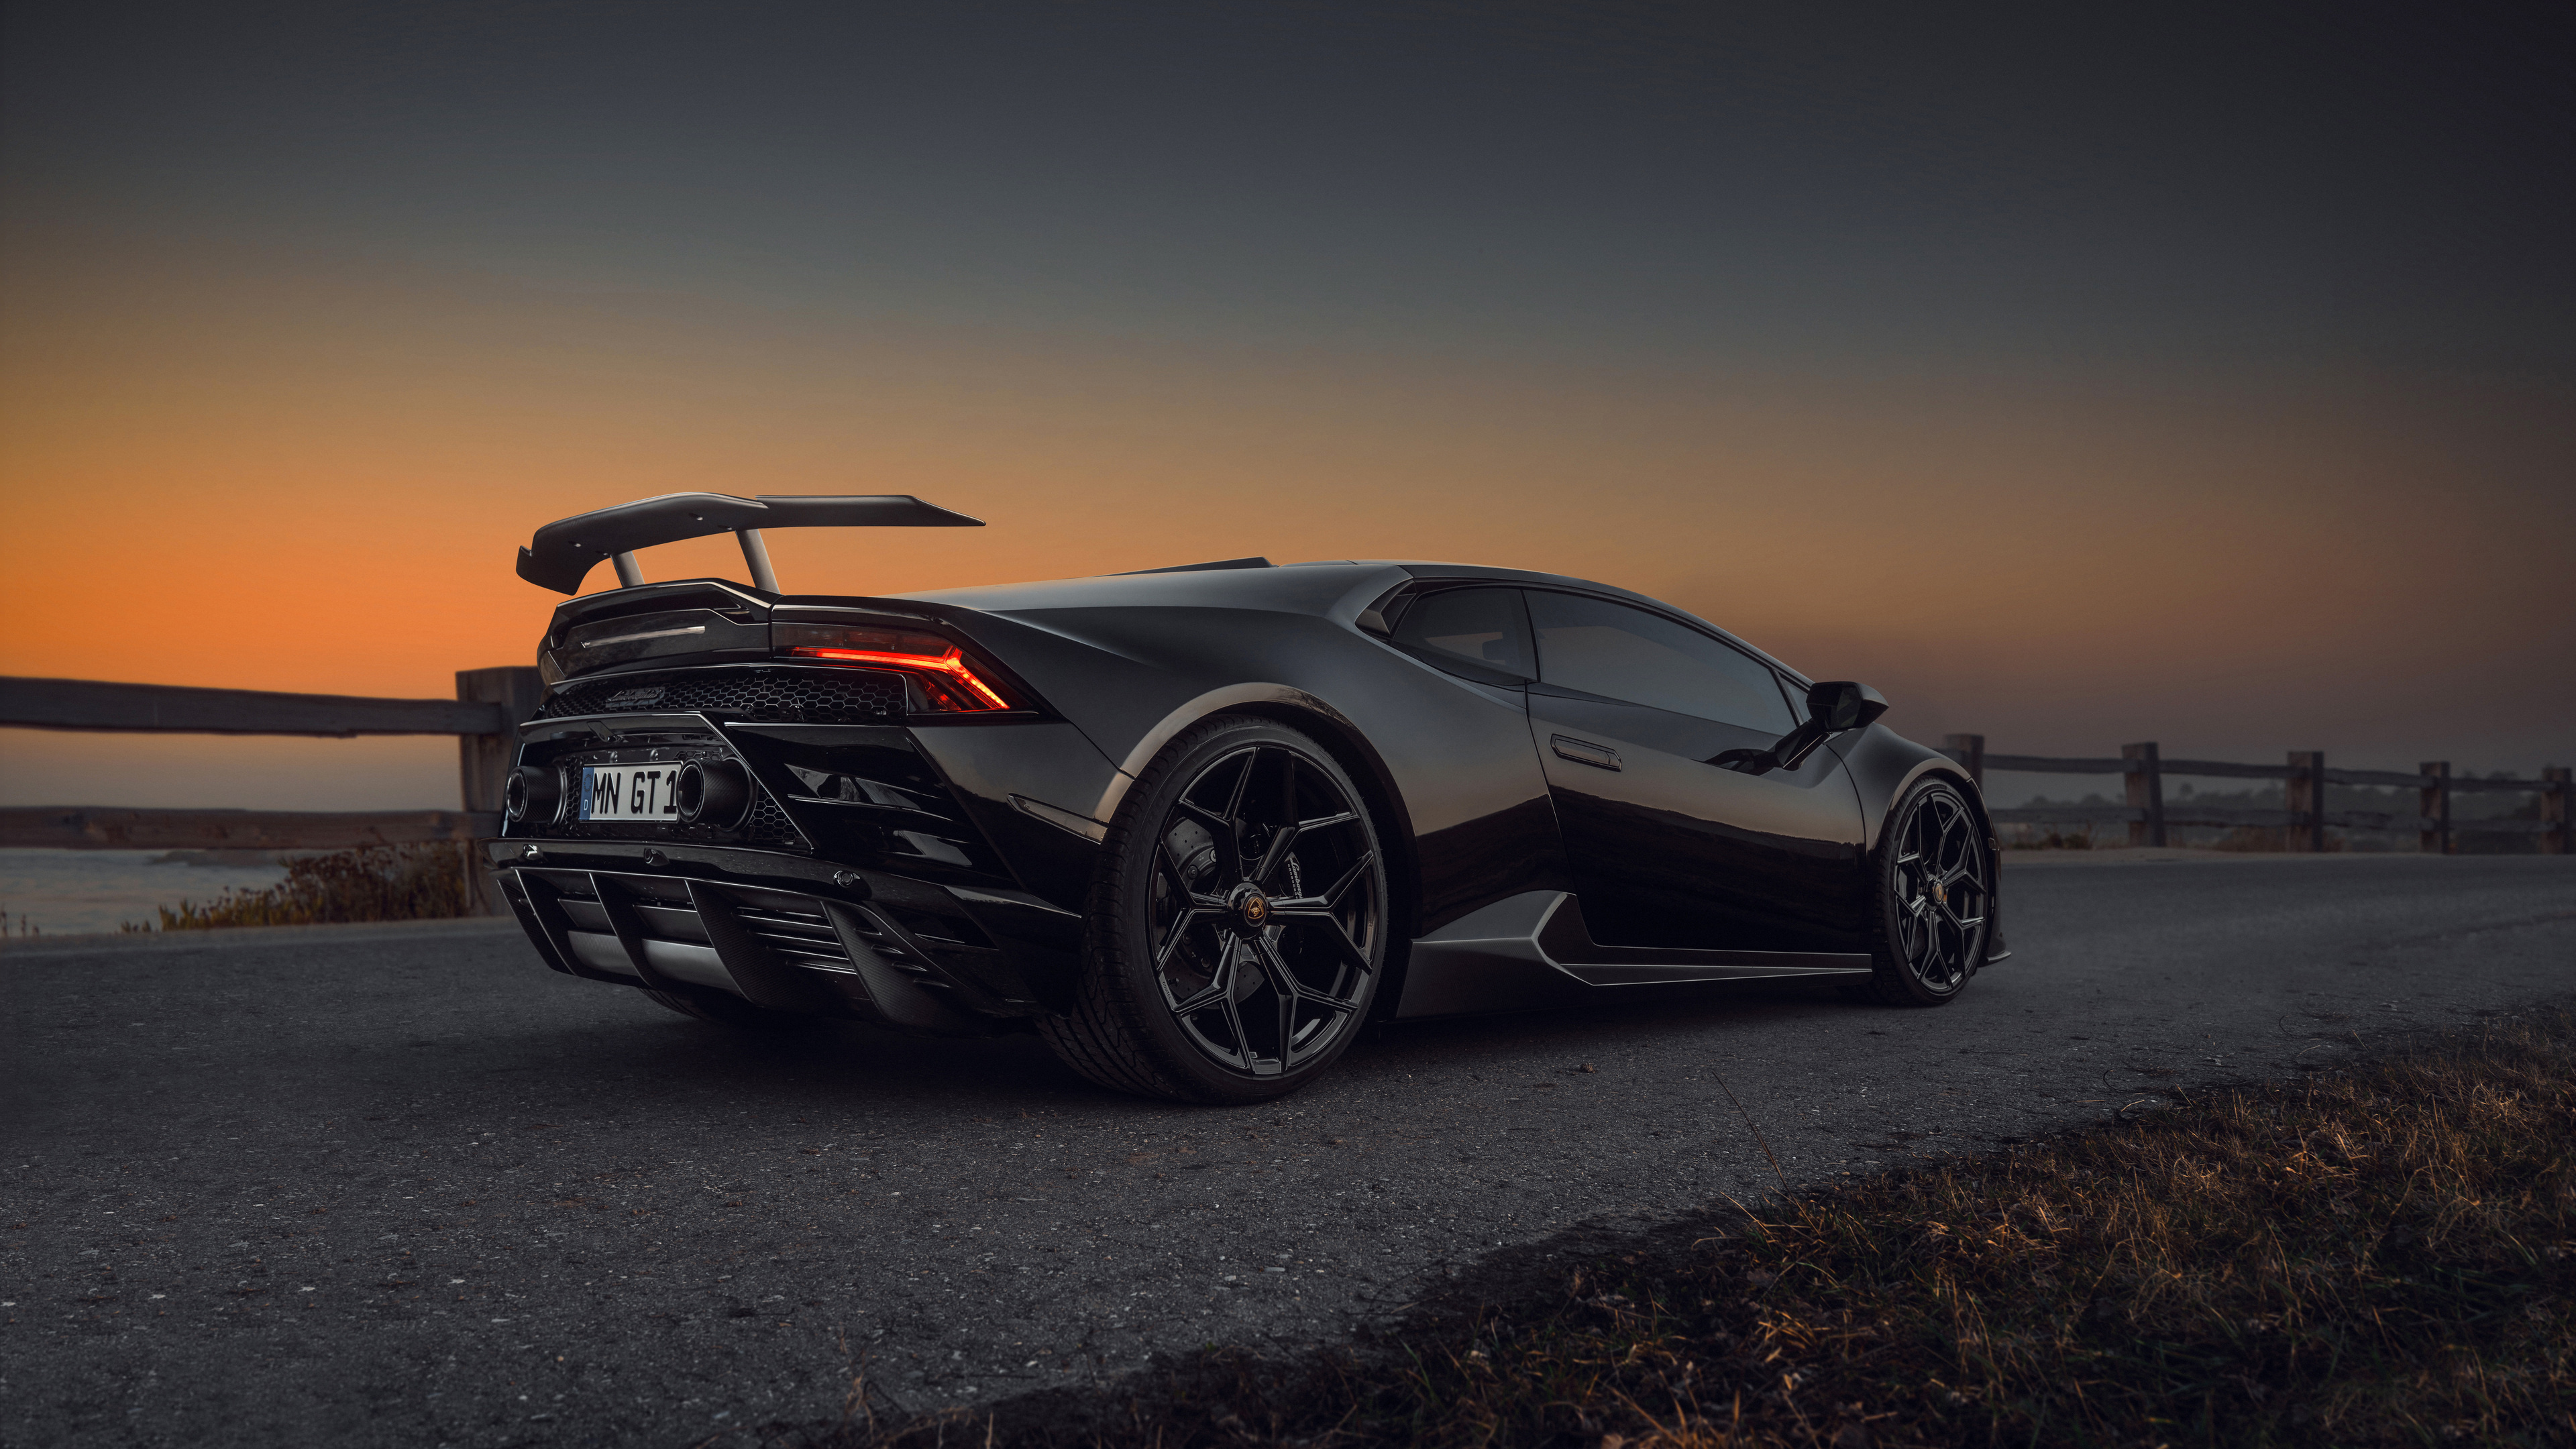 Lamborghini Huracan, Headlights and rear view, Stunning appearance, High-resolution, 3840x2160 4K Desktop